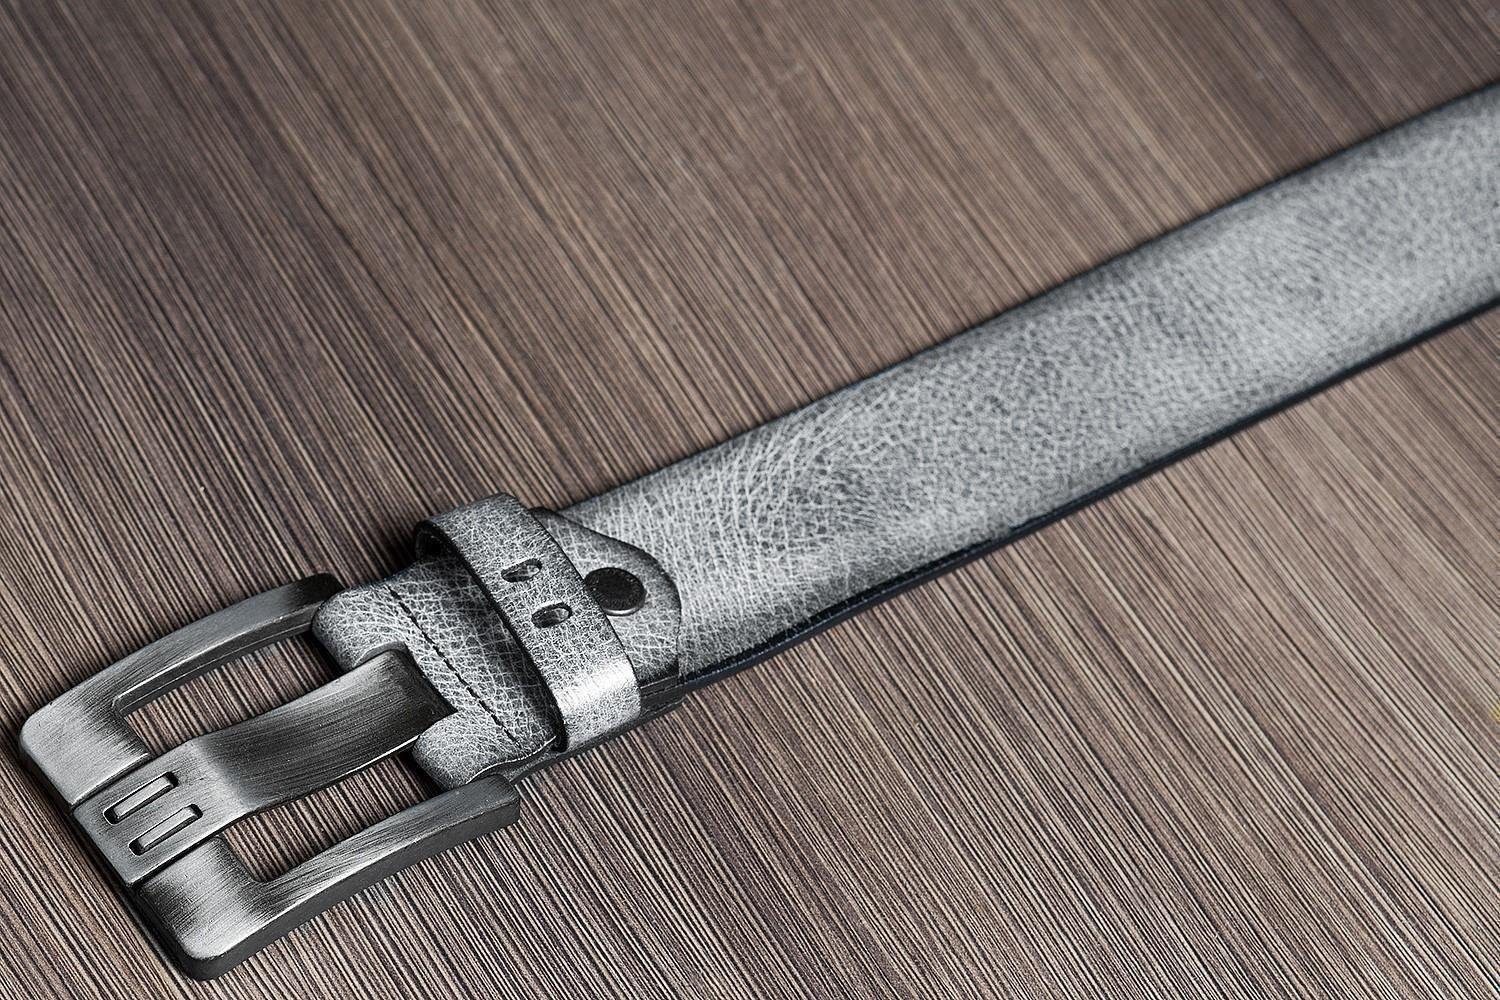 Ledergürtel Baxx schwarz eleganten im Gürtel Cipo Designer Look & BA-CG106 Patch Metall mit